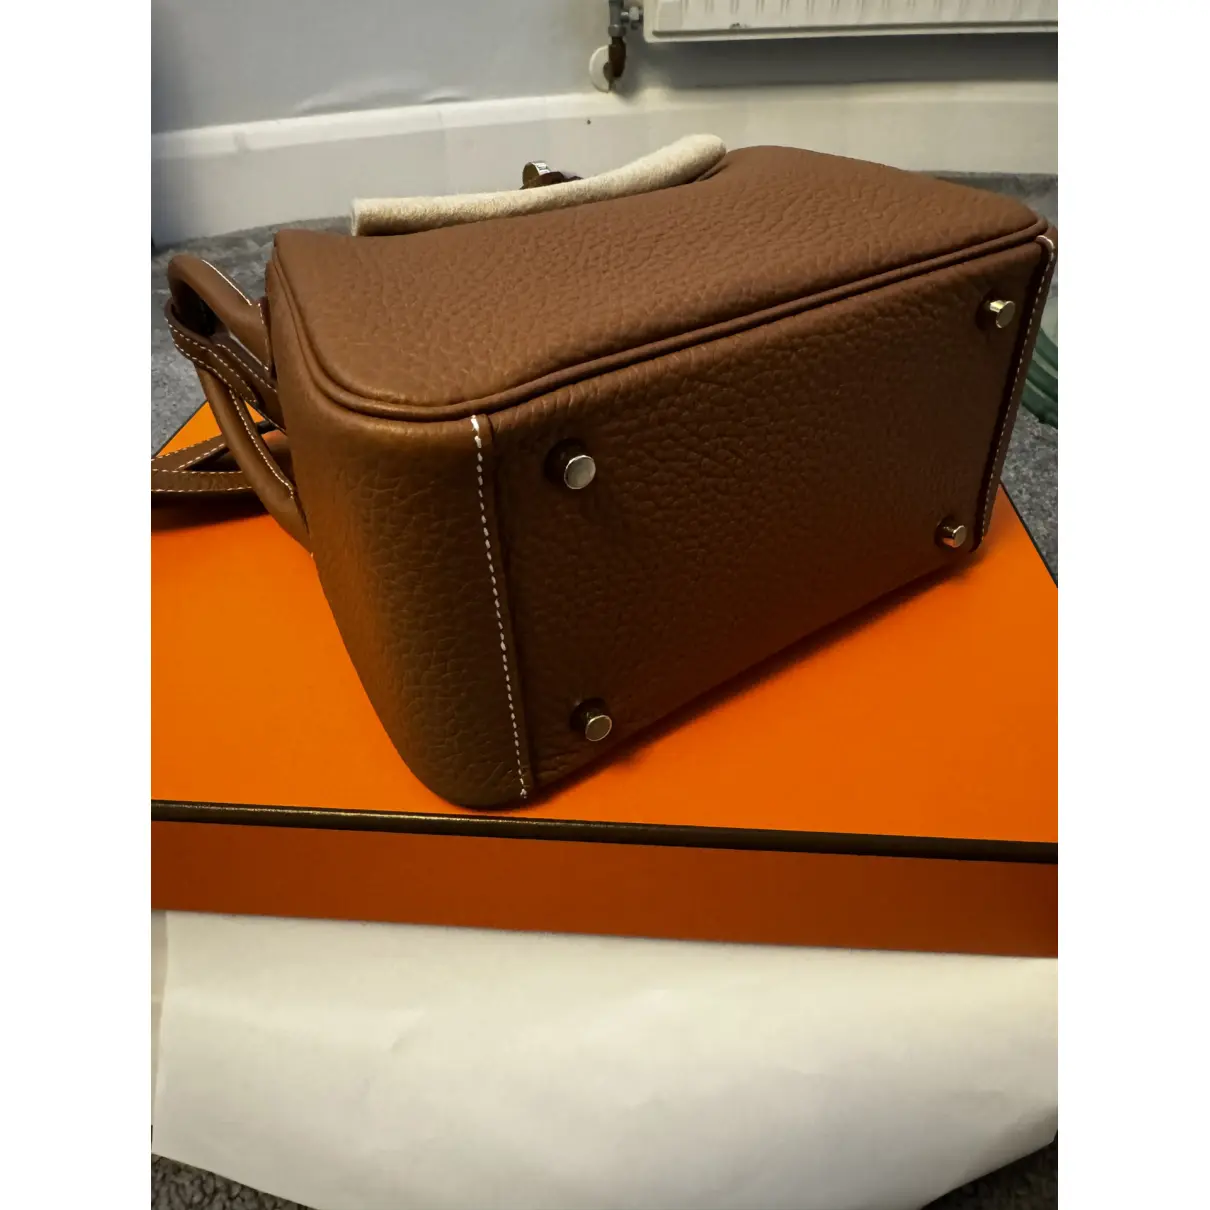 Buy Hermès Lindy leather handbag online